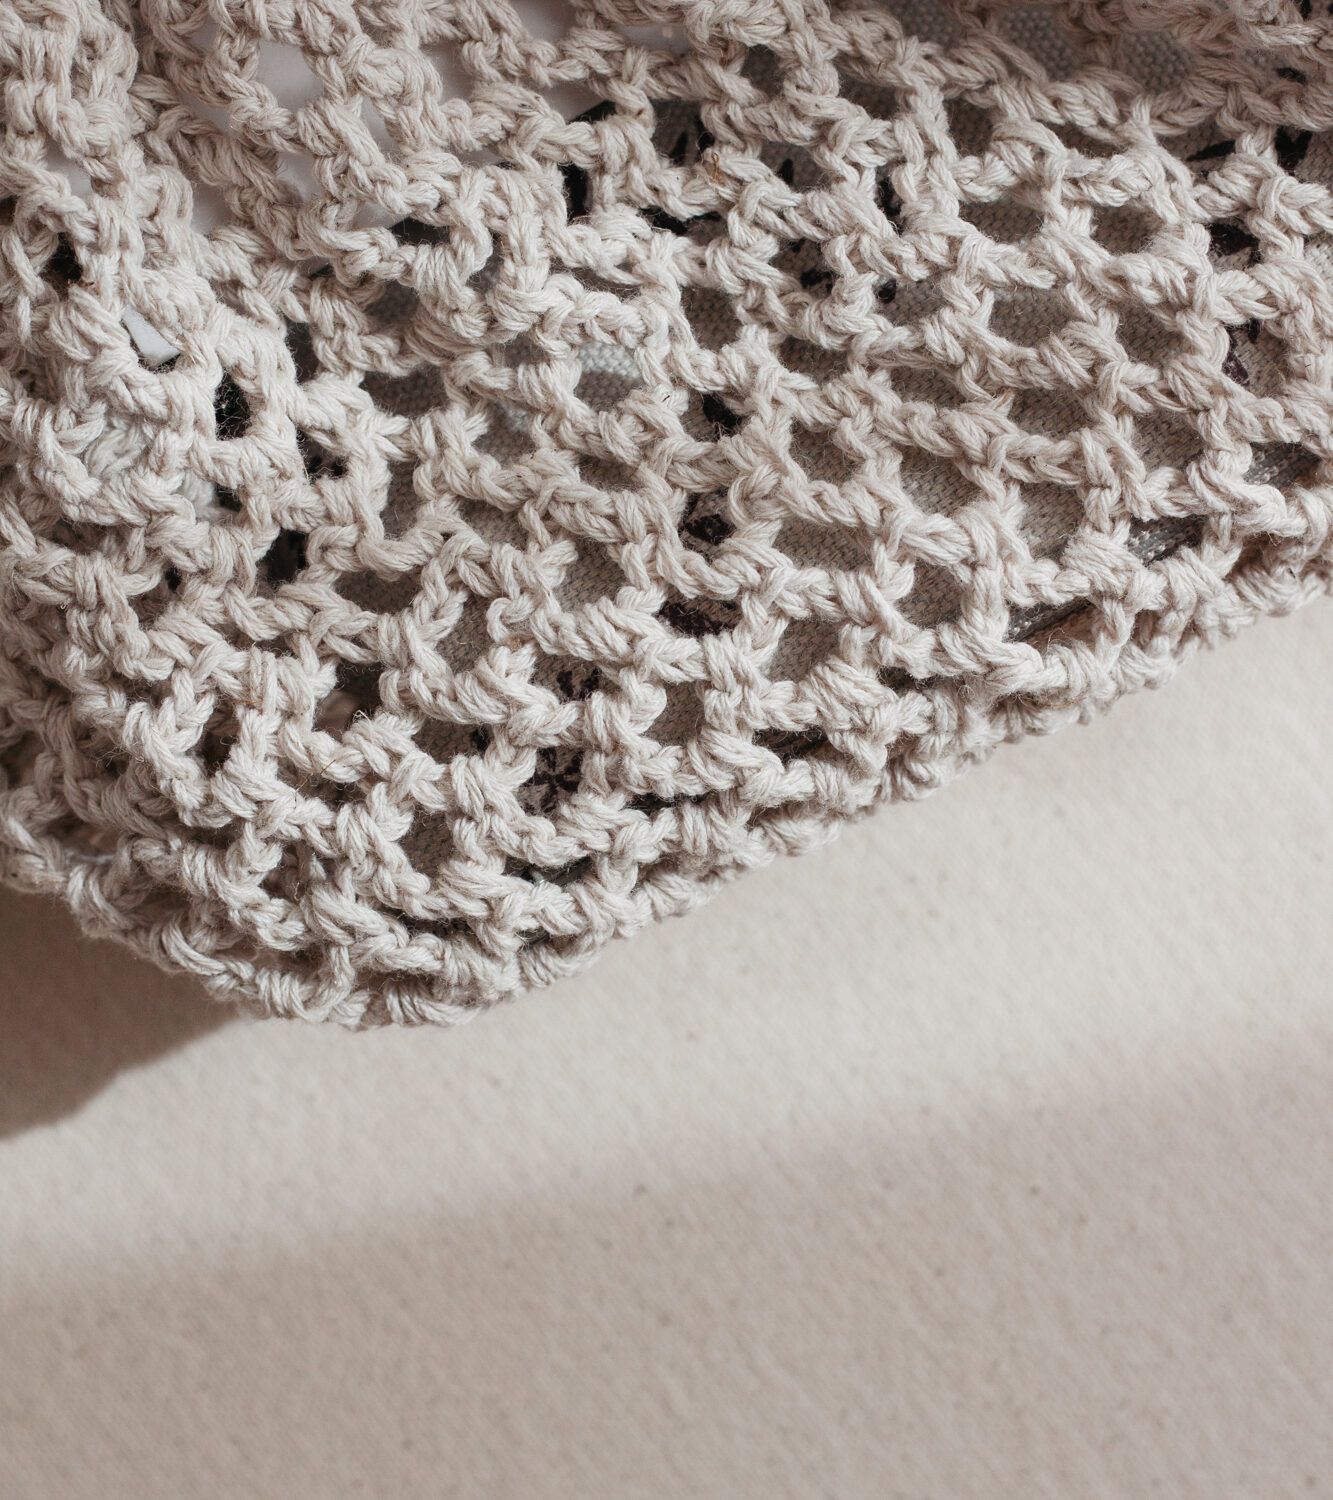 Crochet Net Bag - Cream